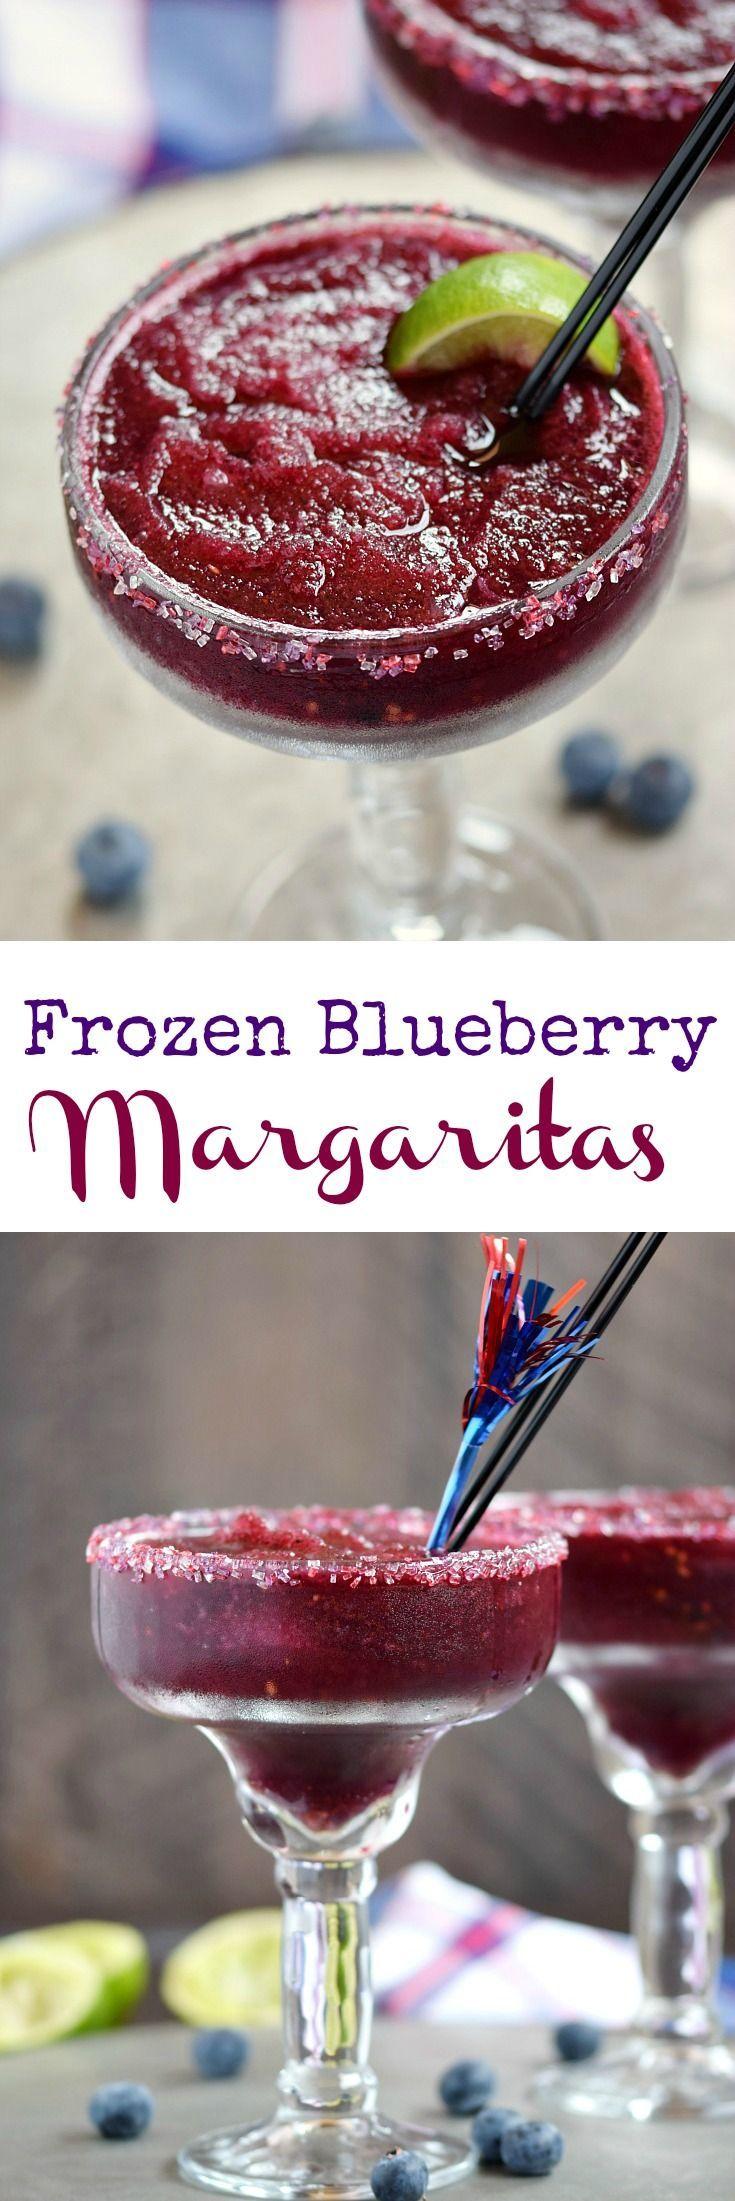 Wedding - Frozen Blueberry Margaritas